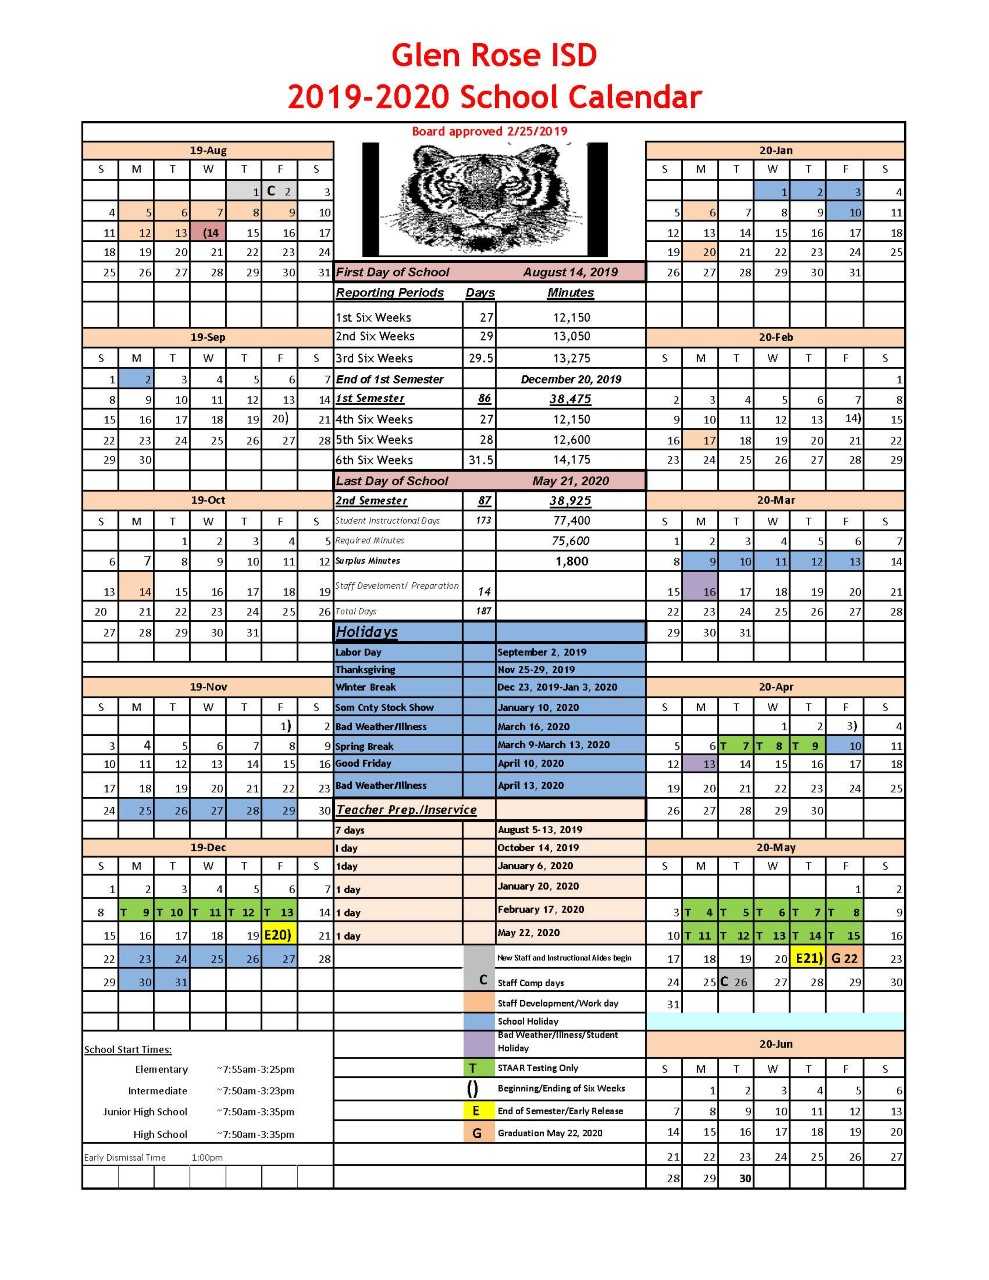 2019-2020 school calendar